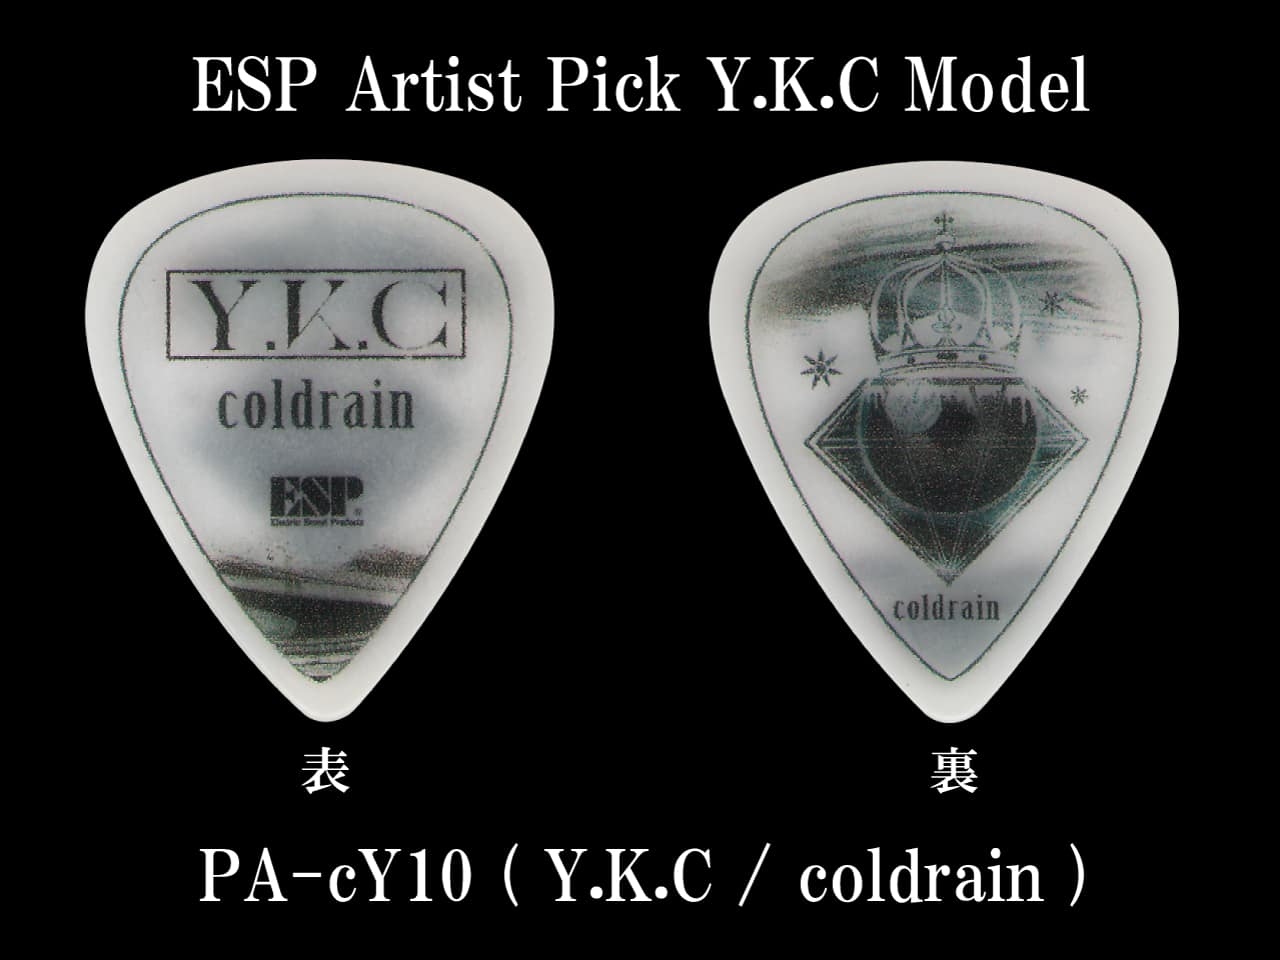 ESP(イーエスピー) Artist Pick Series PA-cY10 (coldrain/Y.K.C Model)